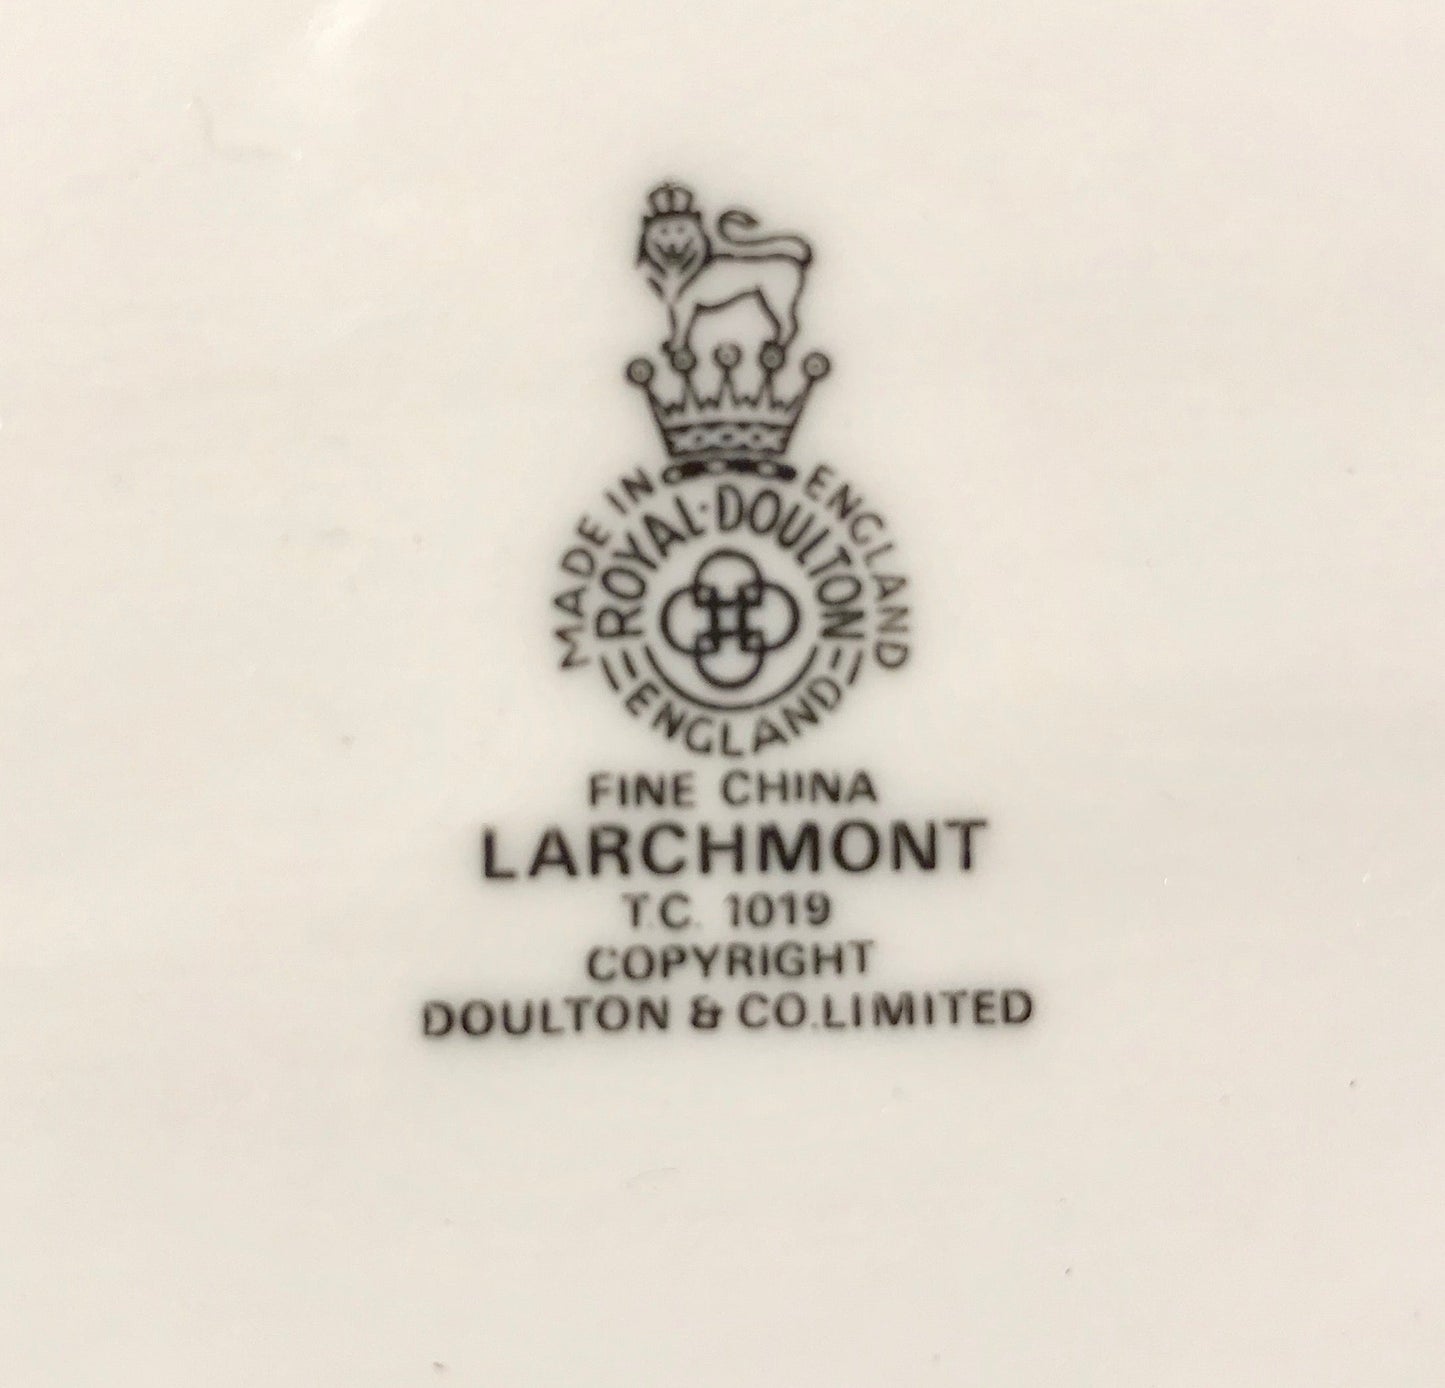 Royal Doulton England larchmont china mark